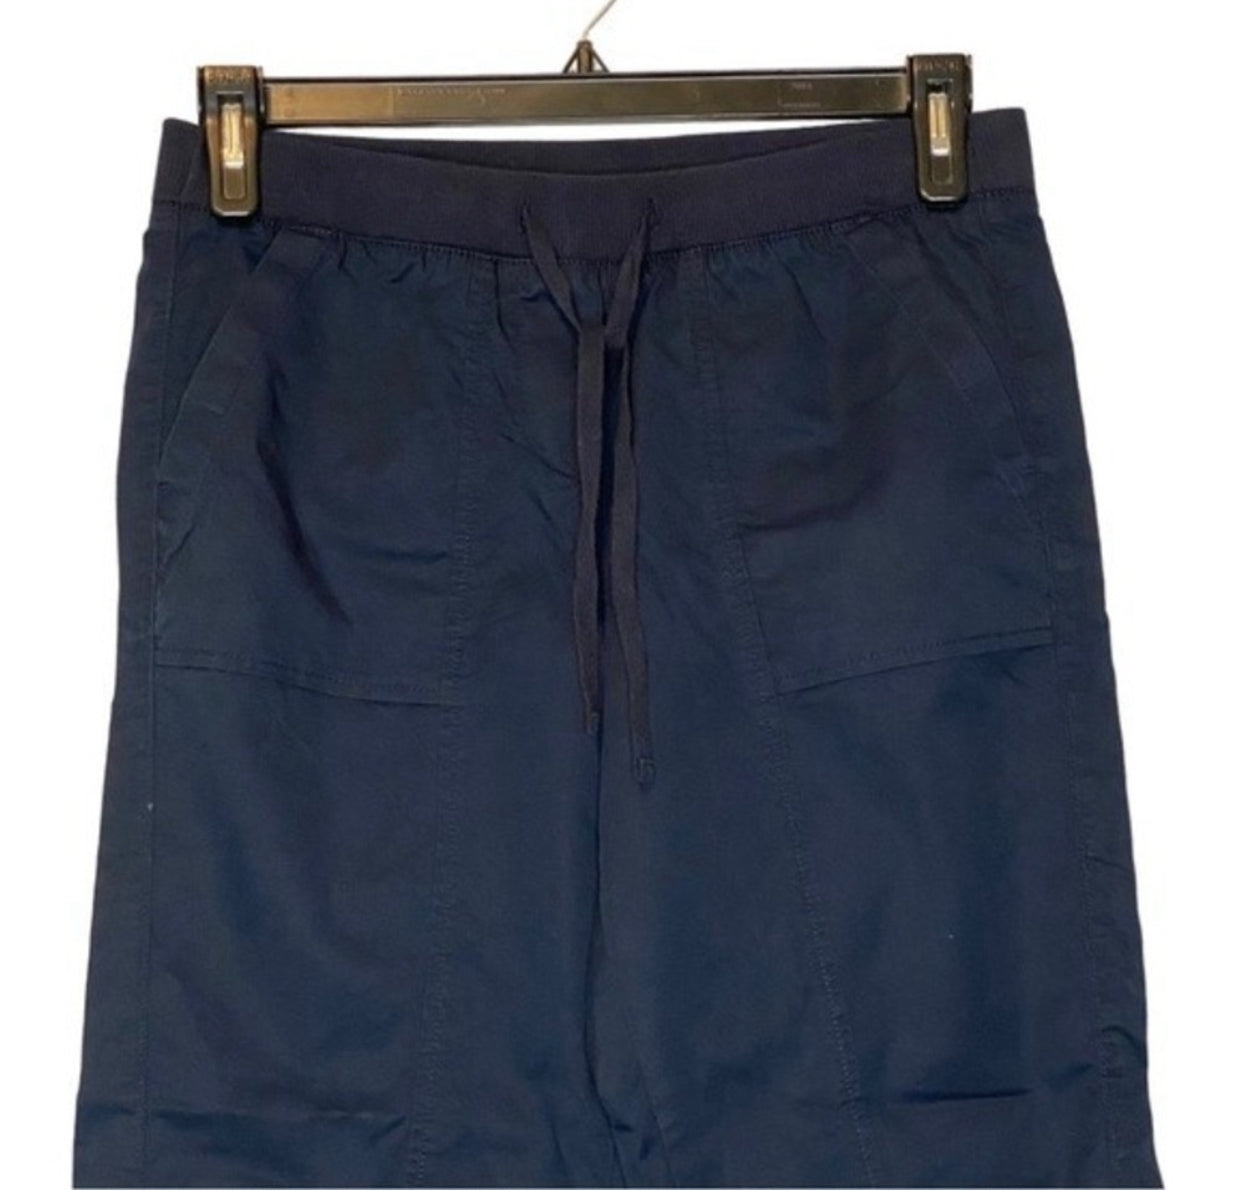 Talbots Roll-Tab Pull-On Navy Blue Drawstring Waist Pants - Size 6P